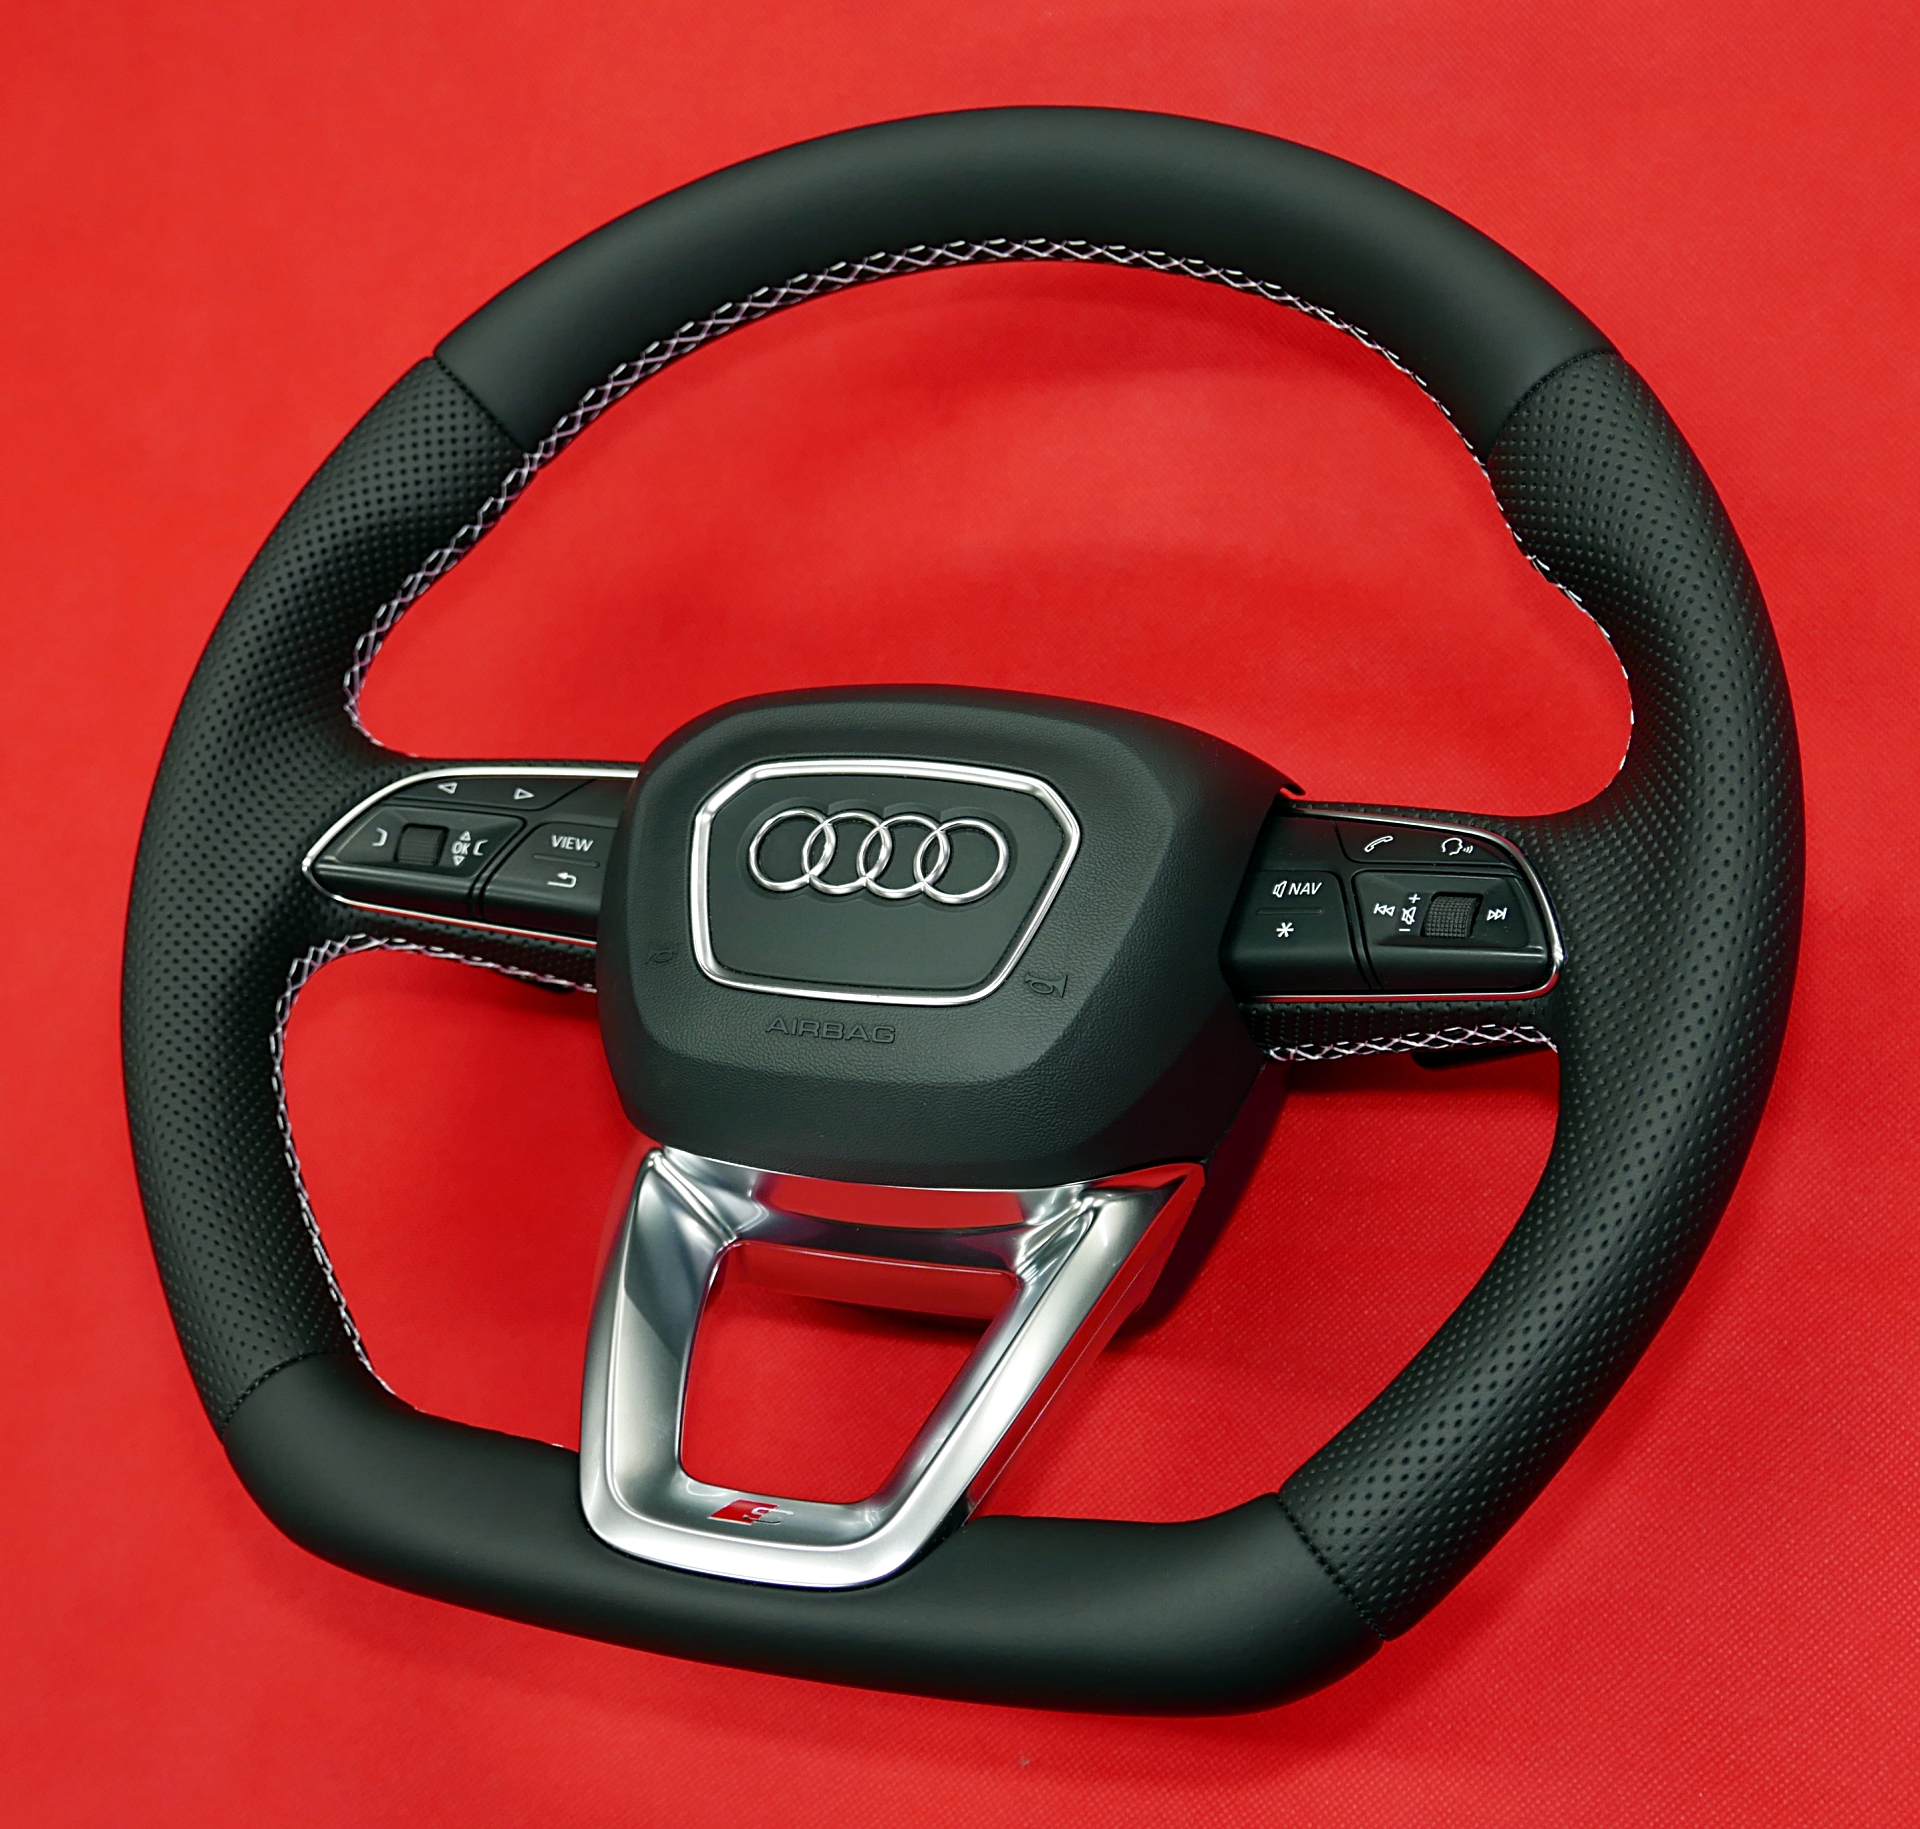 Kierownica Audi Q3 Q5 Q7 tuning modyfikacja obszycie